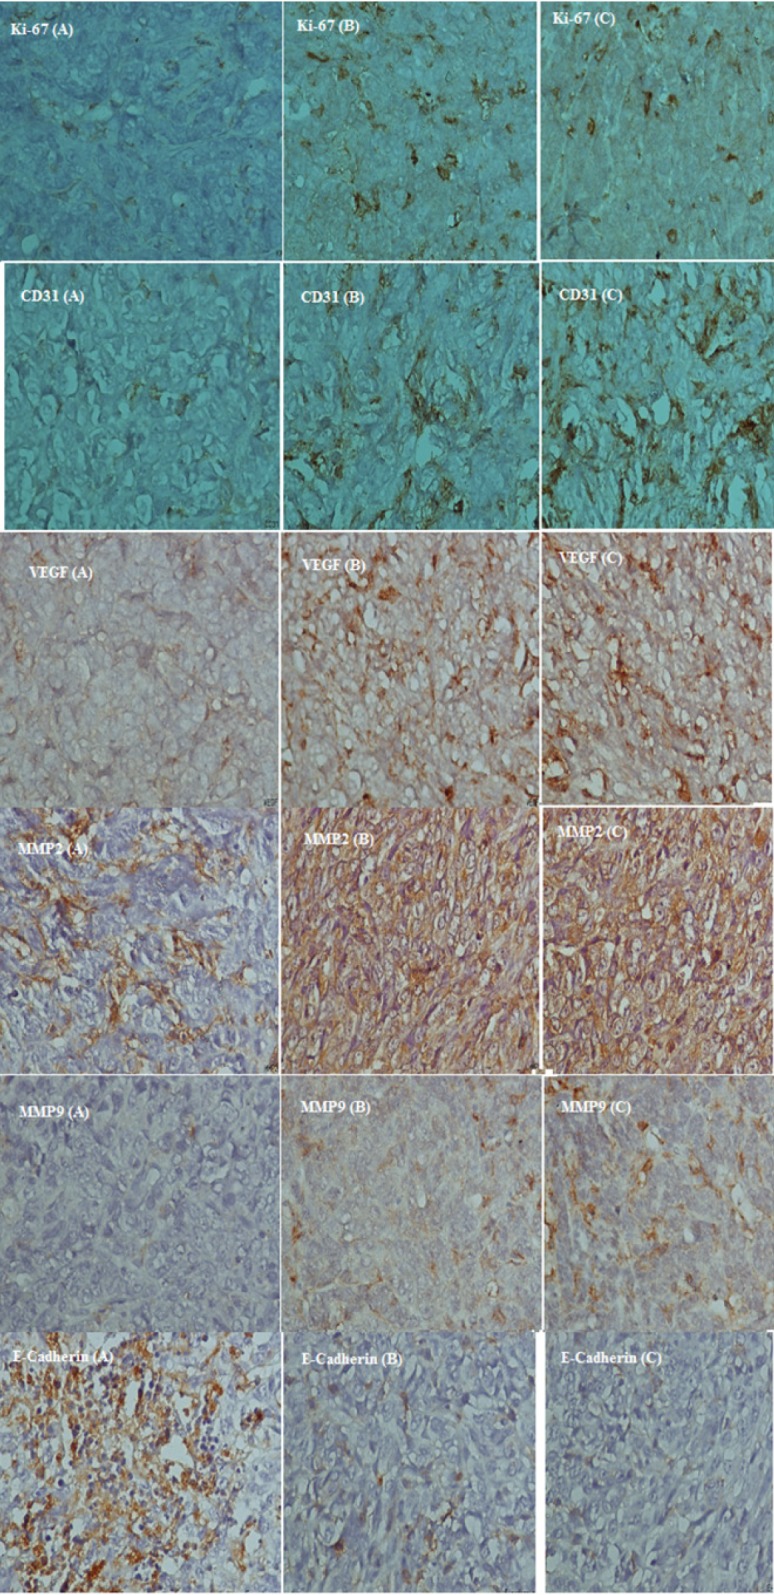 Photography of Immunohistochemical staining of Ki-67, CD31, VEGF, MMP2, MMP9 and E-cadherin in tumor-bearing mice